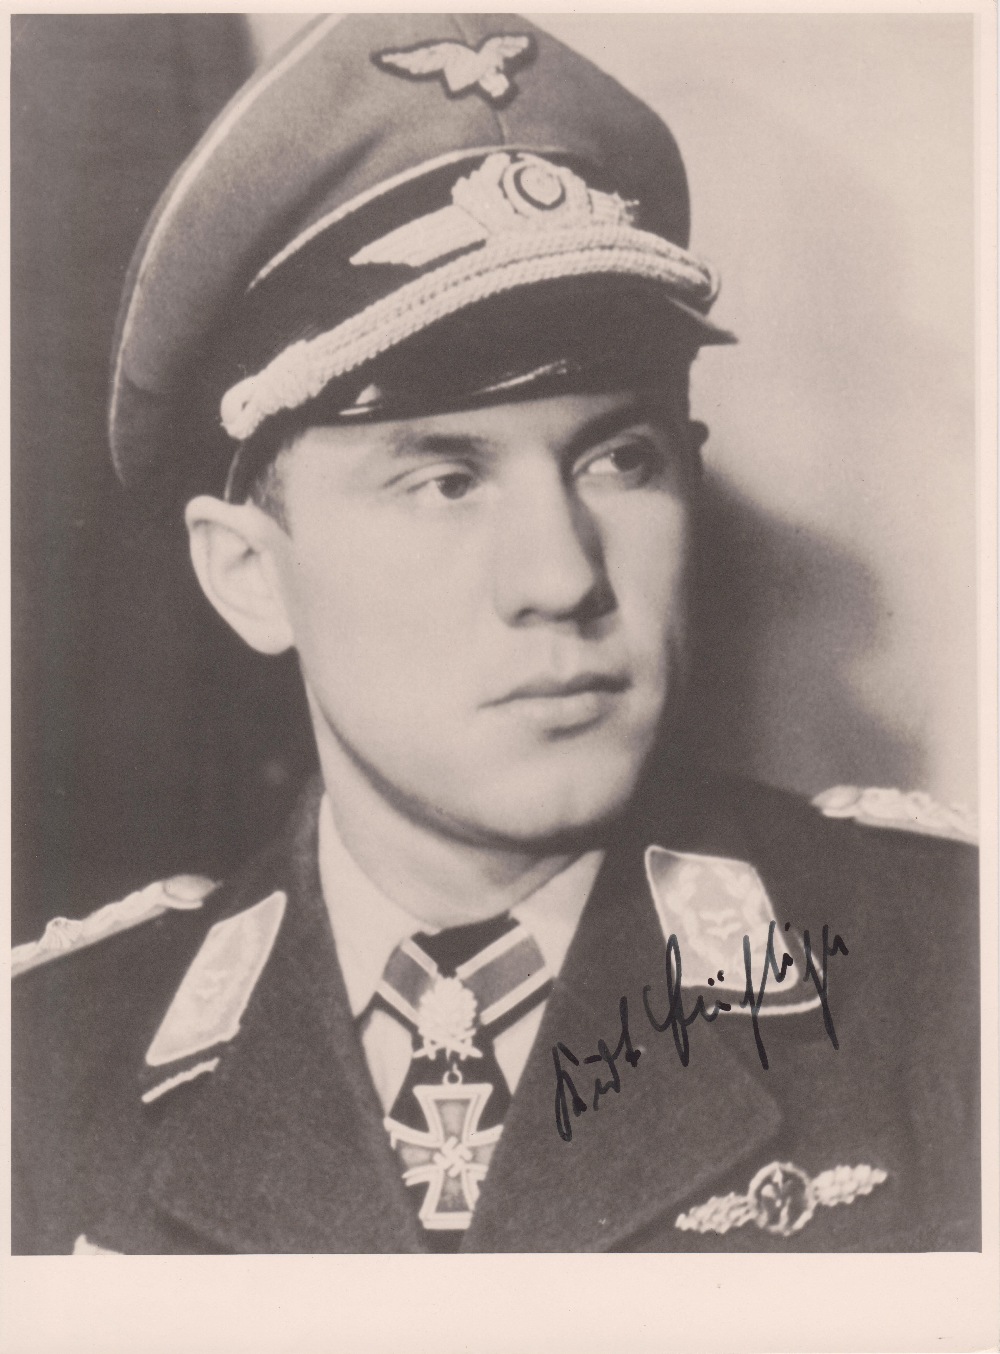 Unteroffizier Kurt Buhligen (1917 – 1985) signature on black and white photograph size approx 24cm x